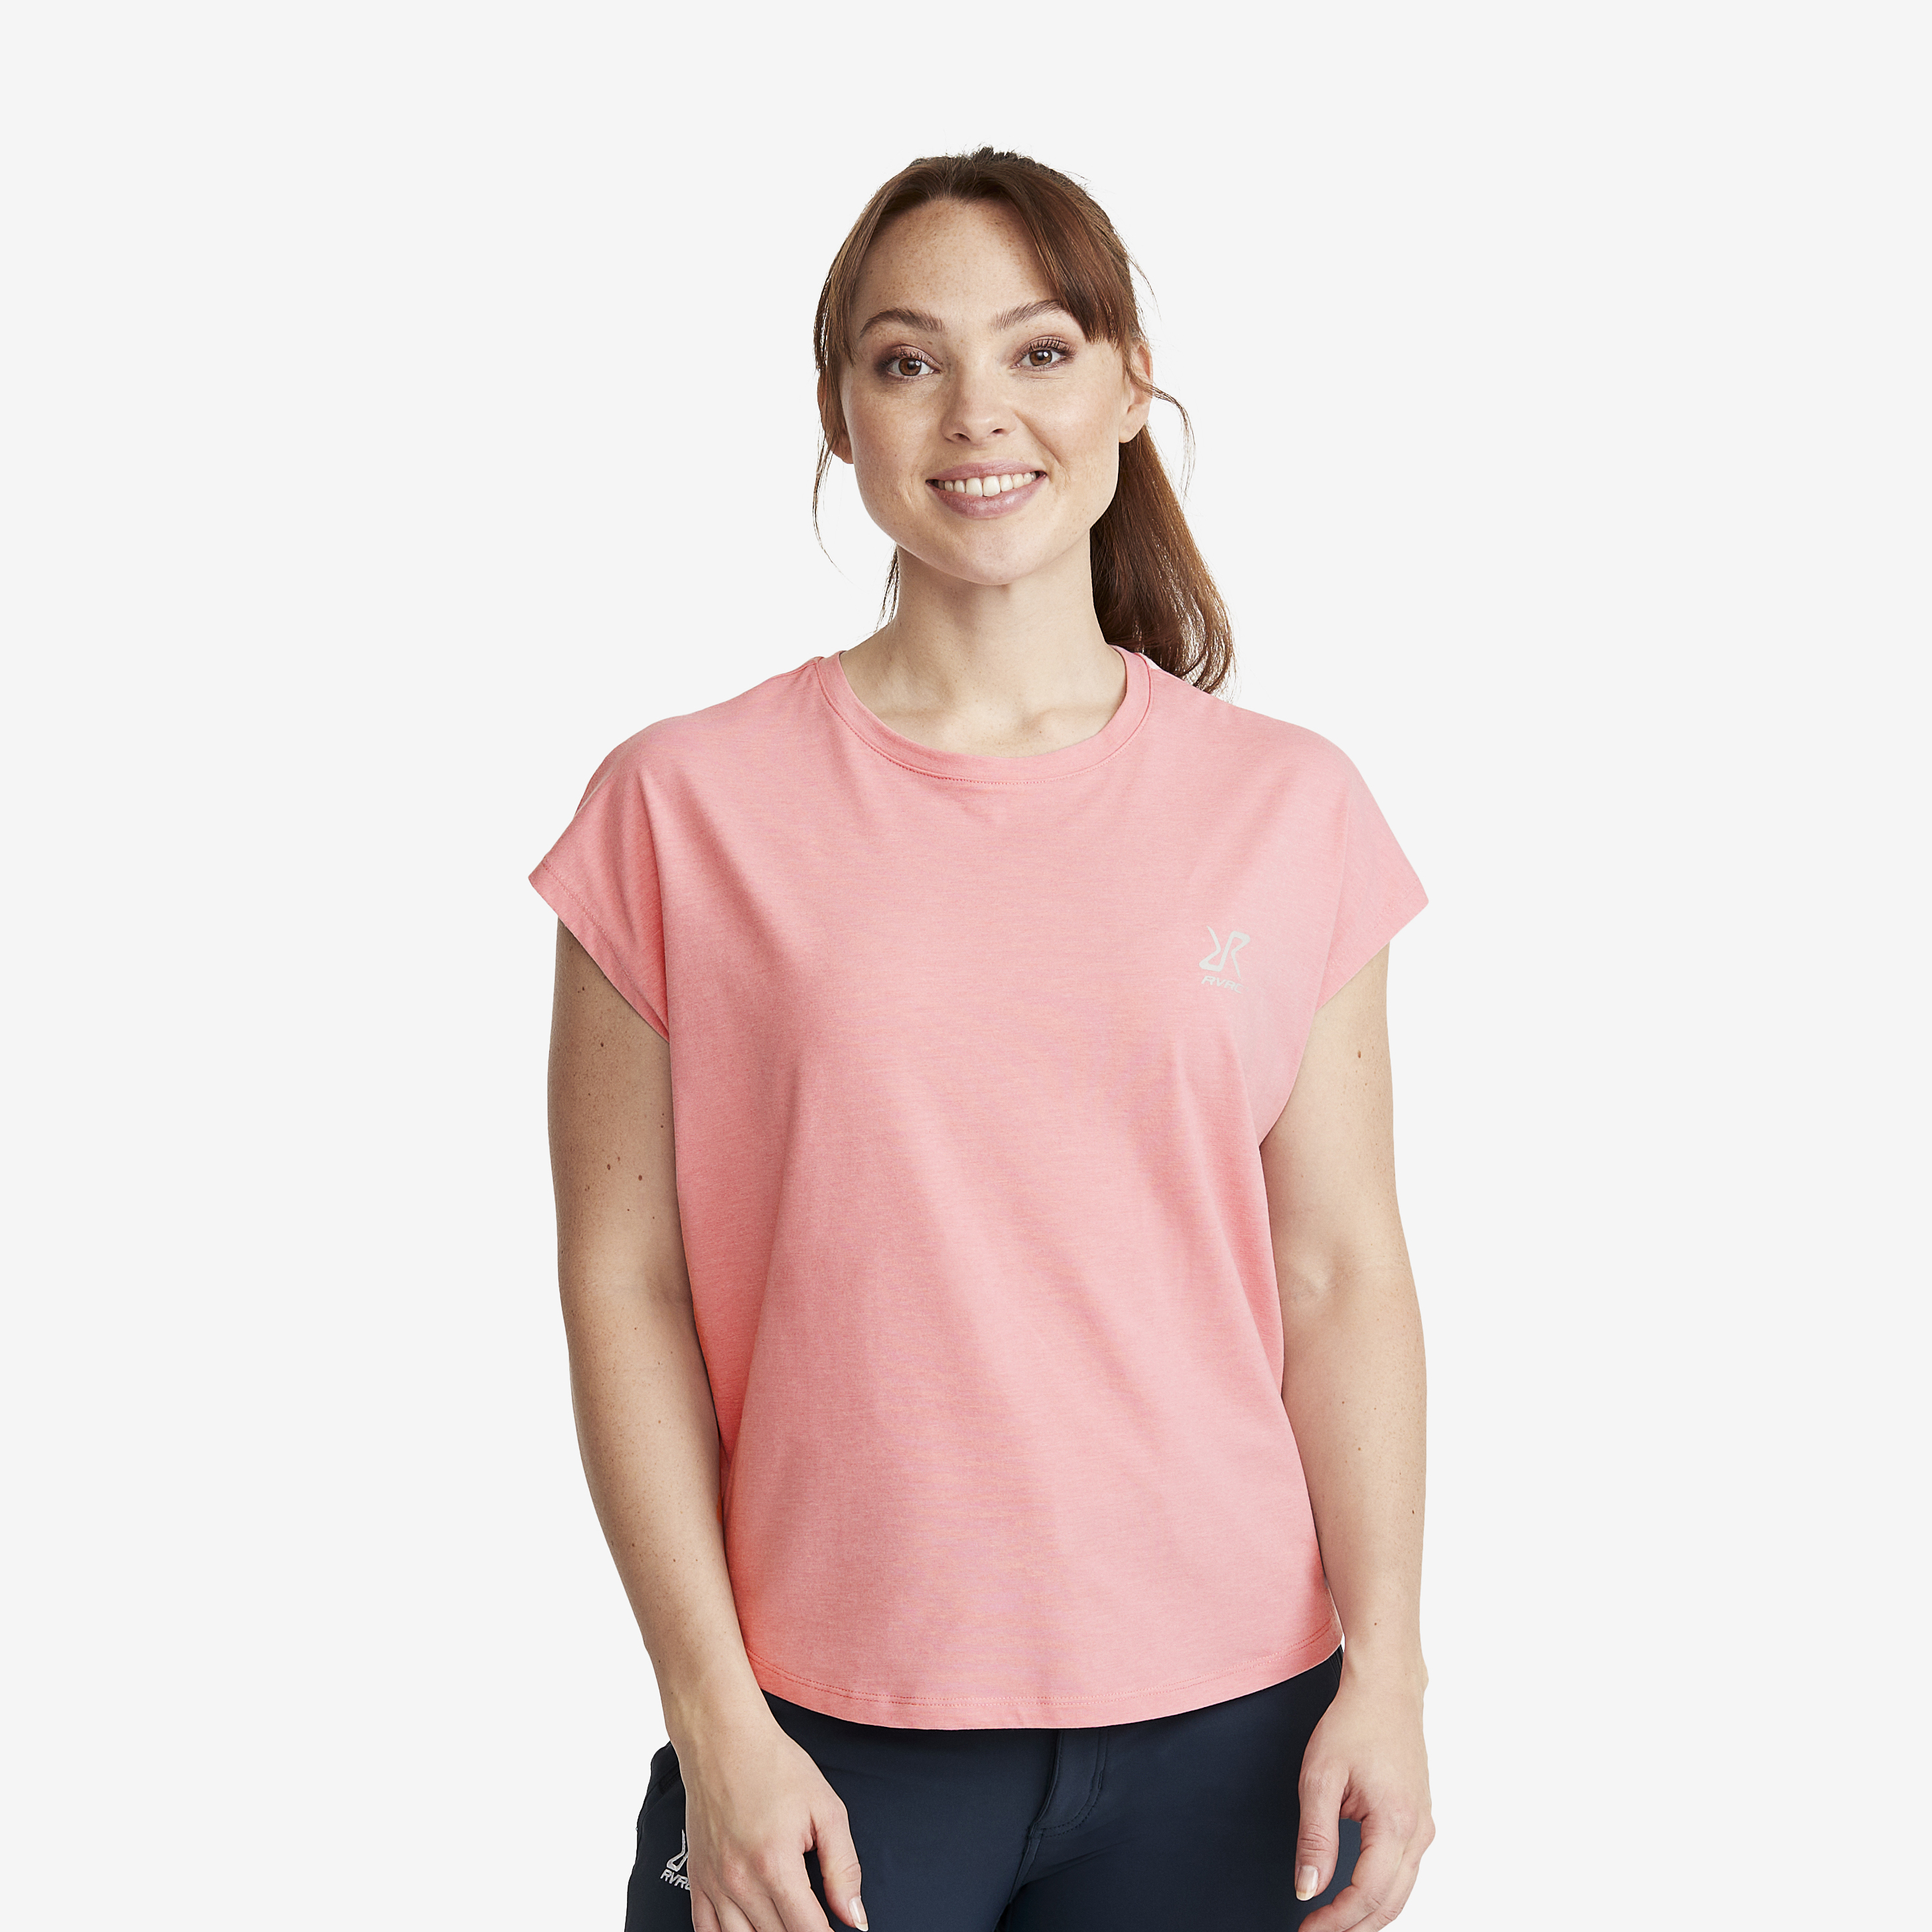 Soft Sleeveless Top - Dam - Dusty Pink, Storlek:S - Dam > Tröjor > T-shirts